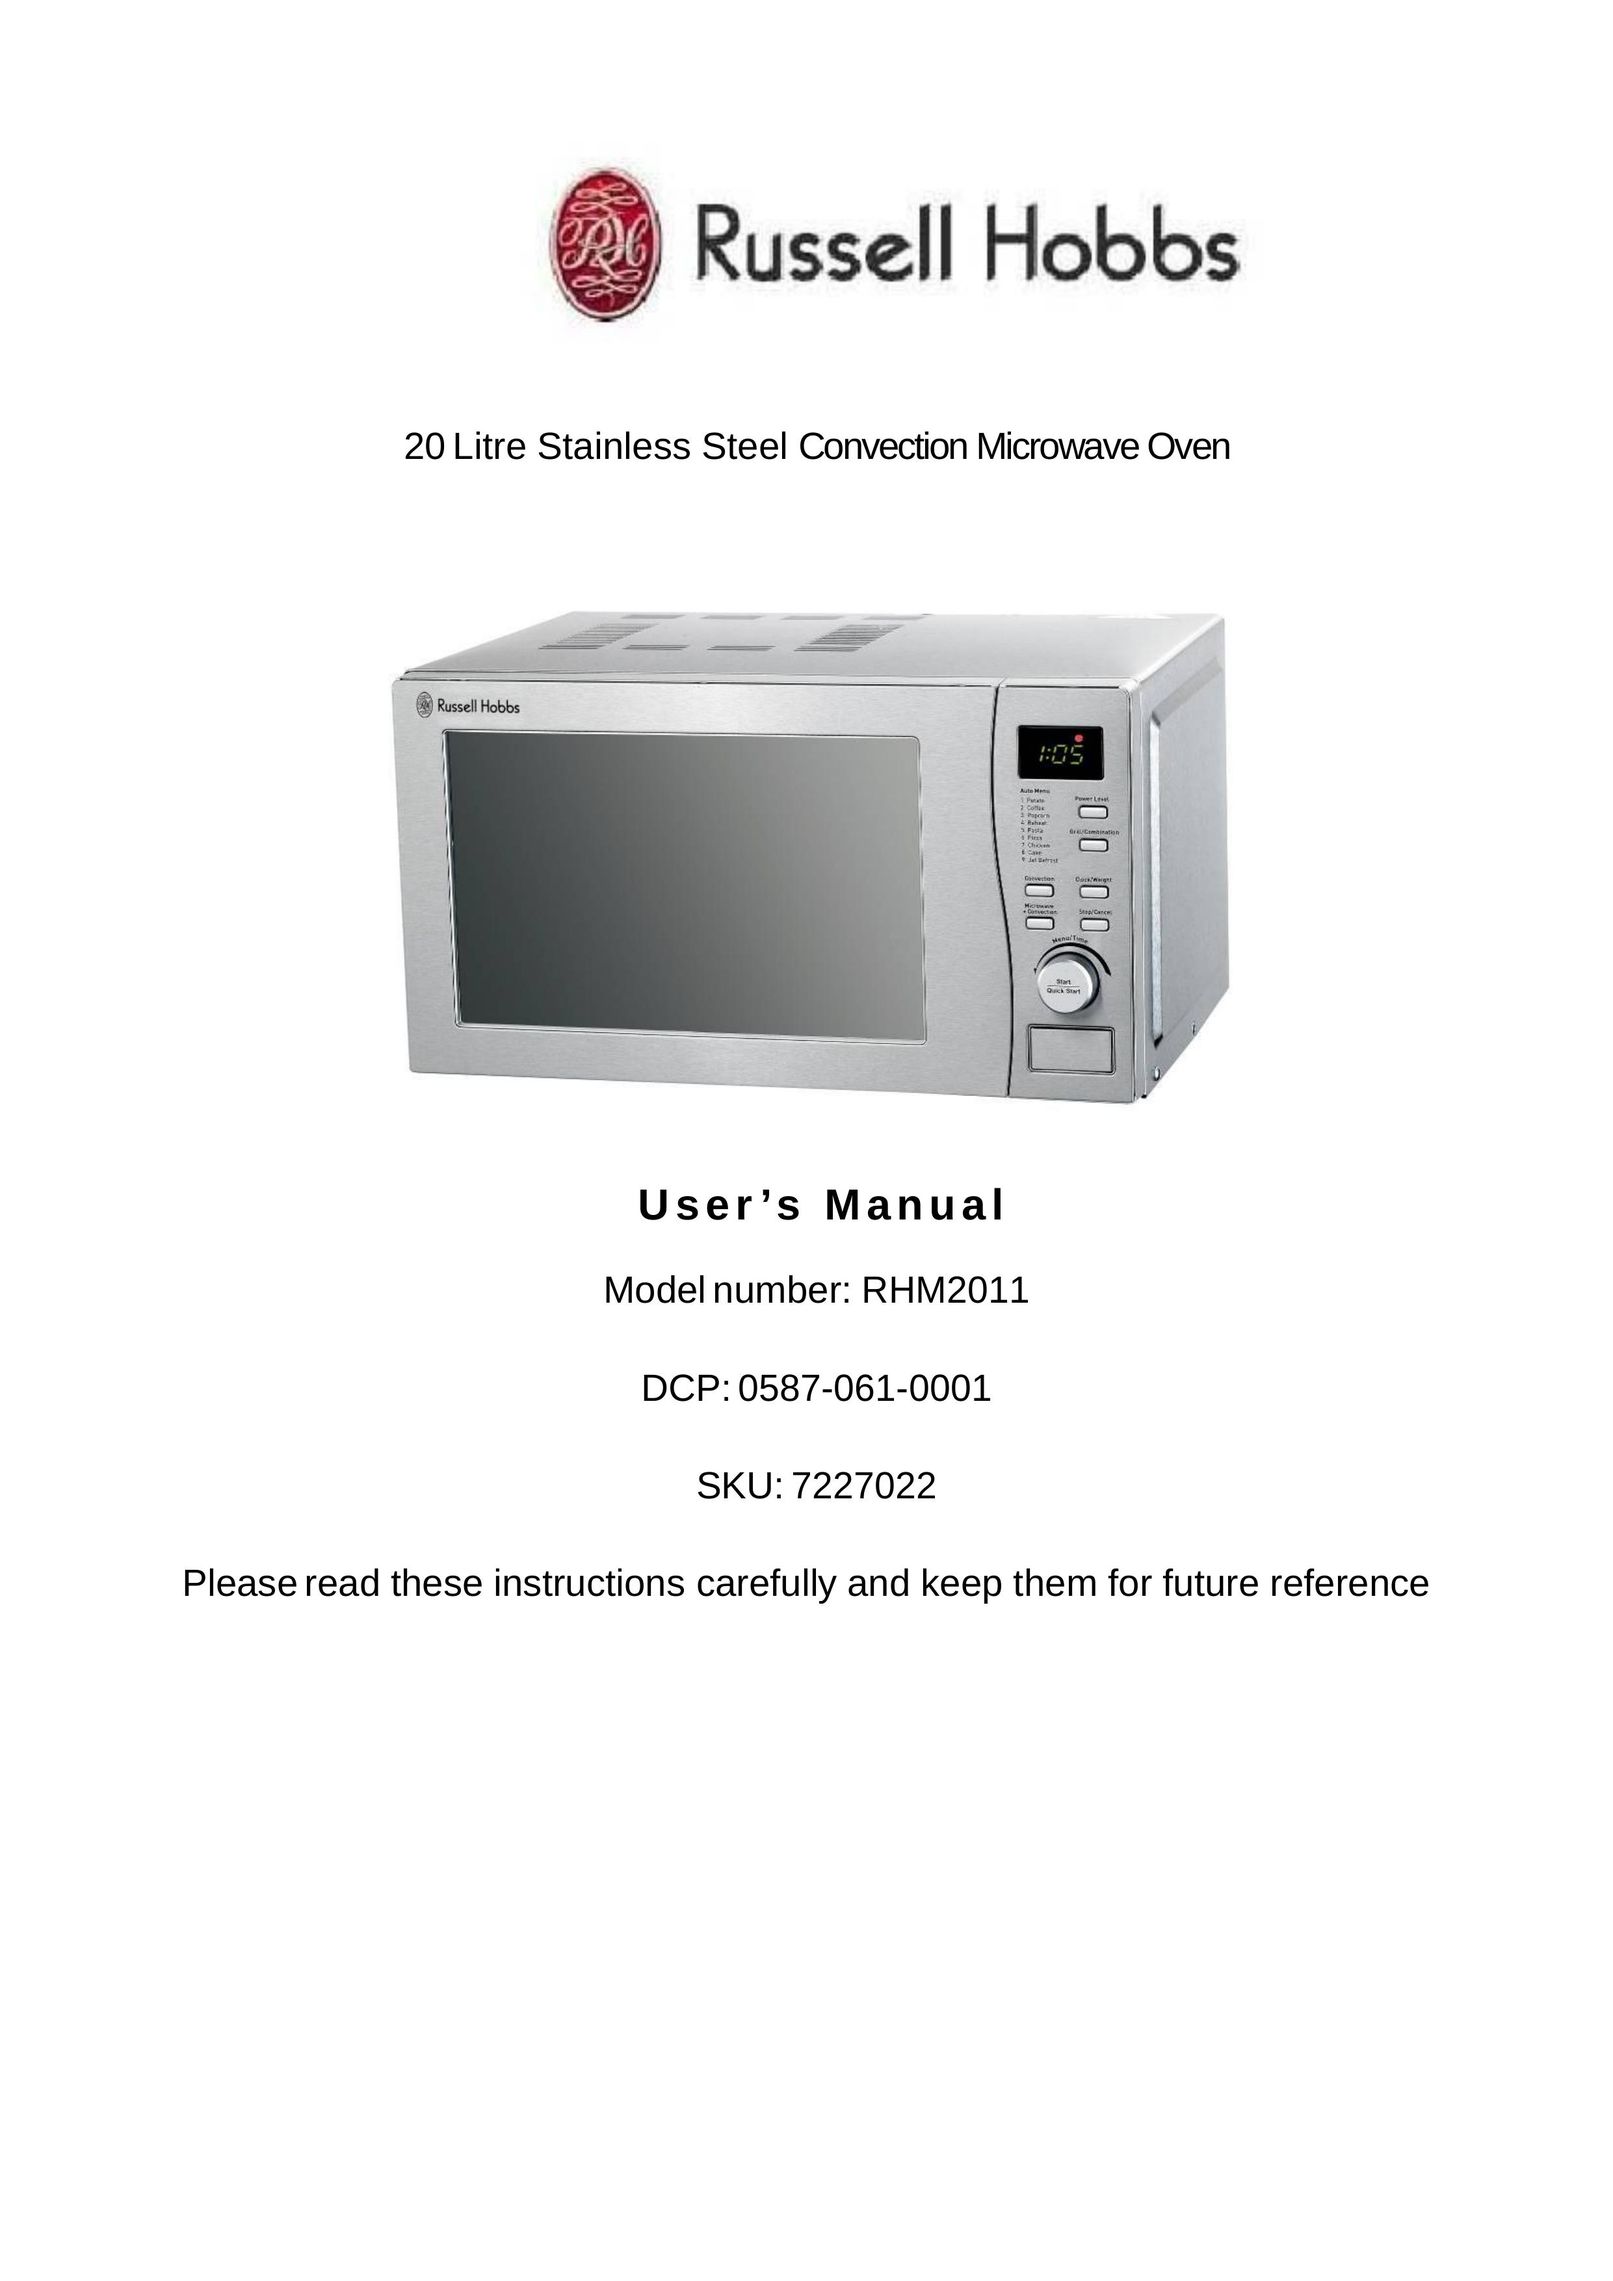 Russell Hobbs RHM2011 Microwave Oven User Manual